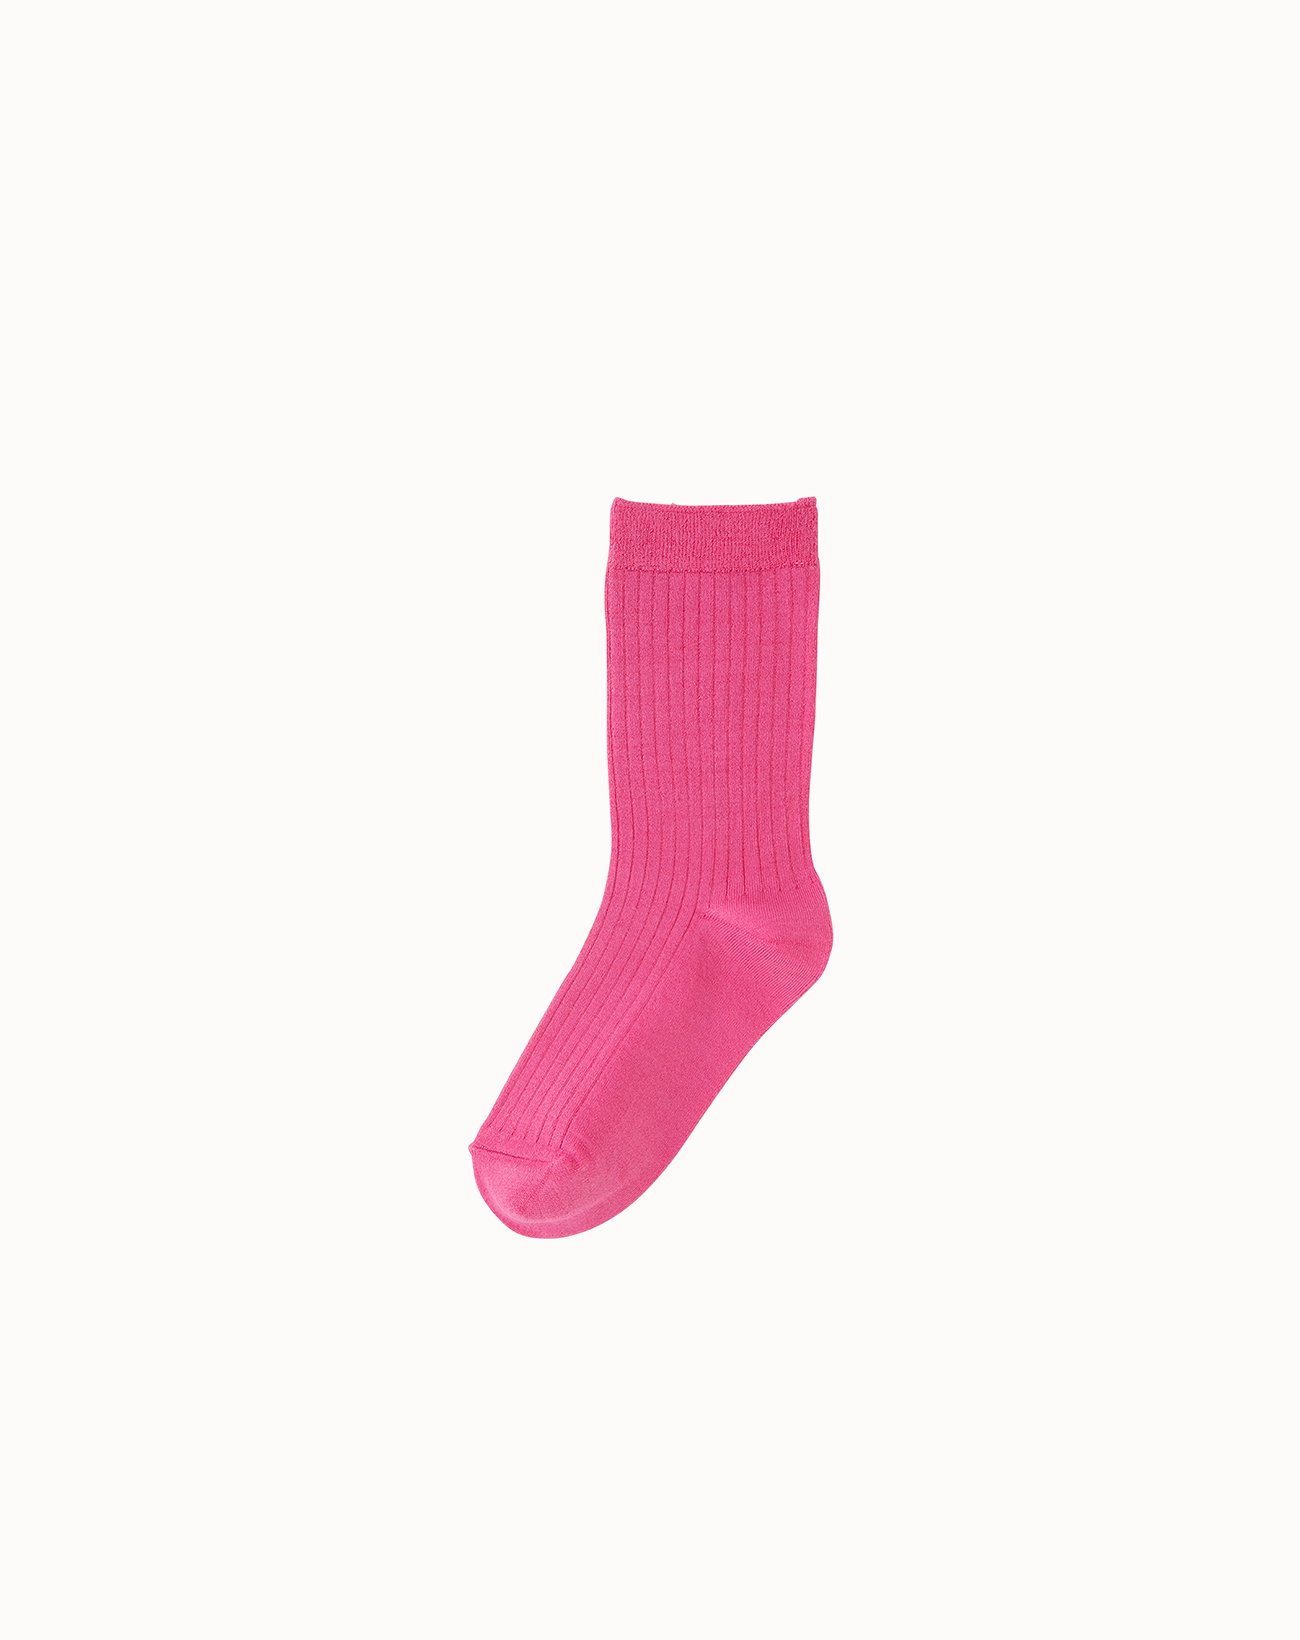 leur logette - Silk Rib Socks - Pink